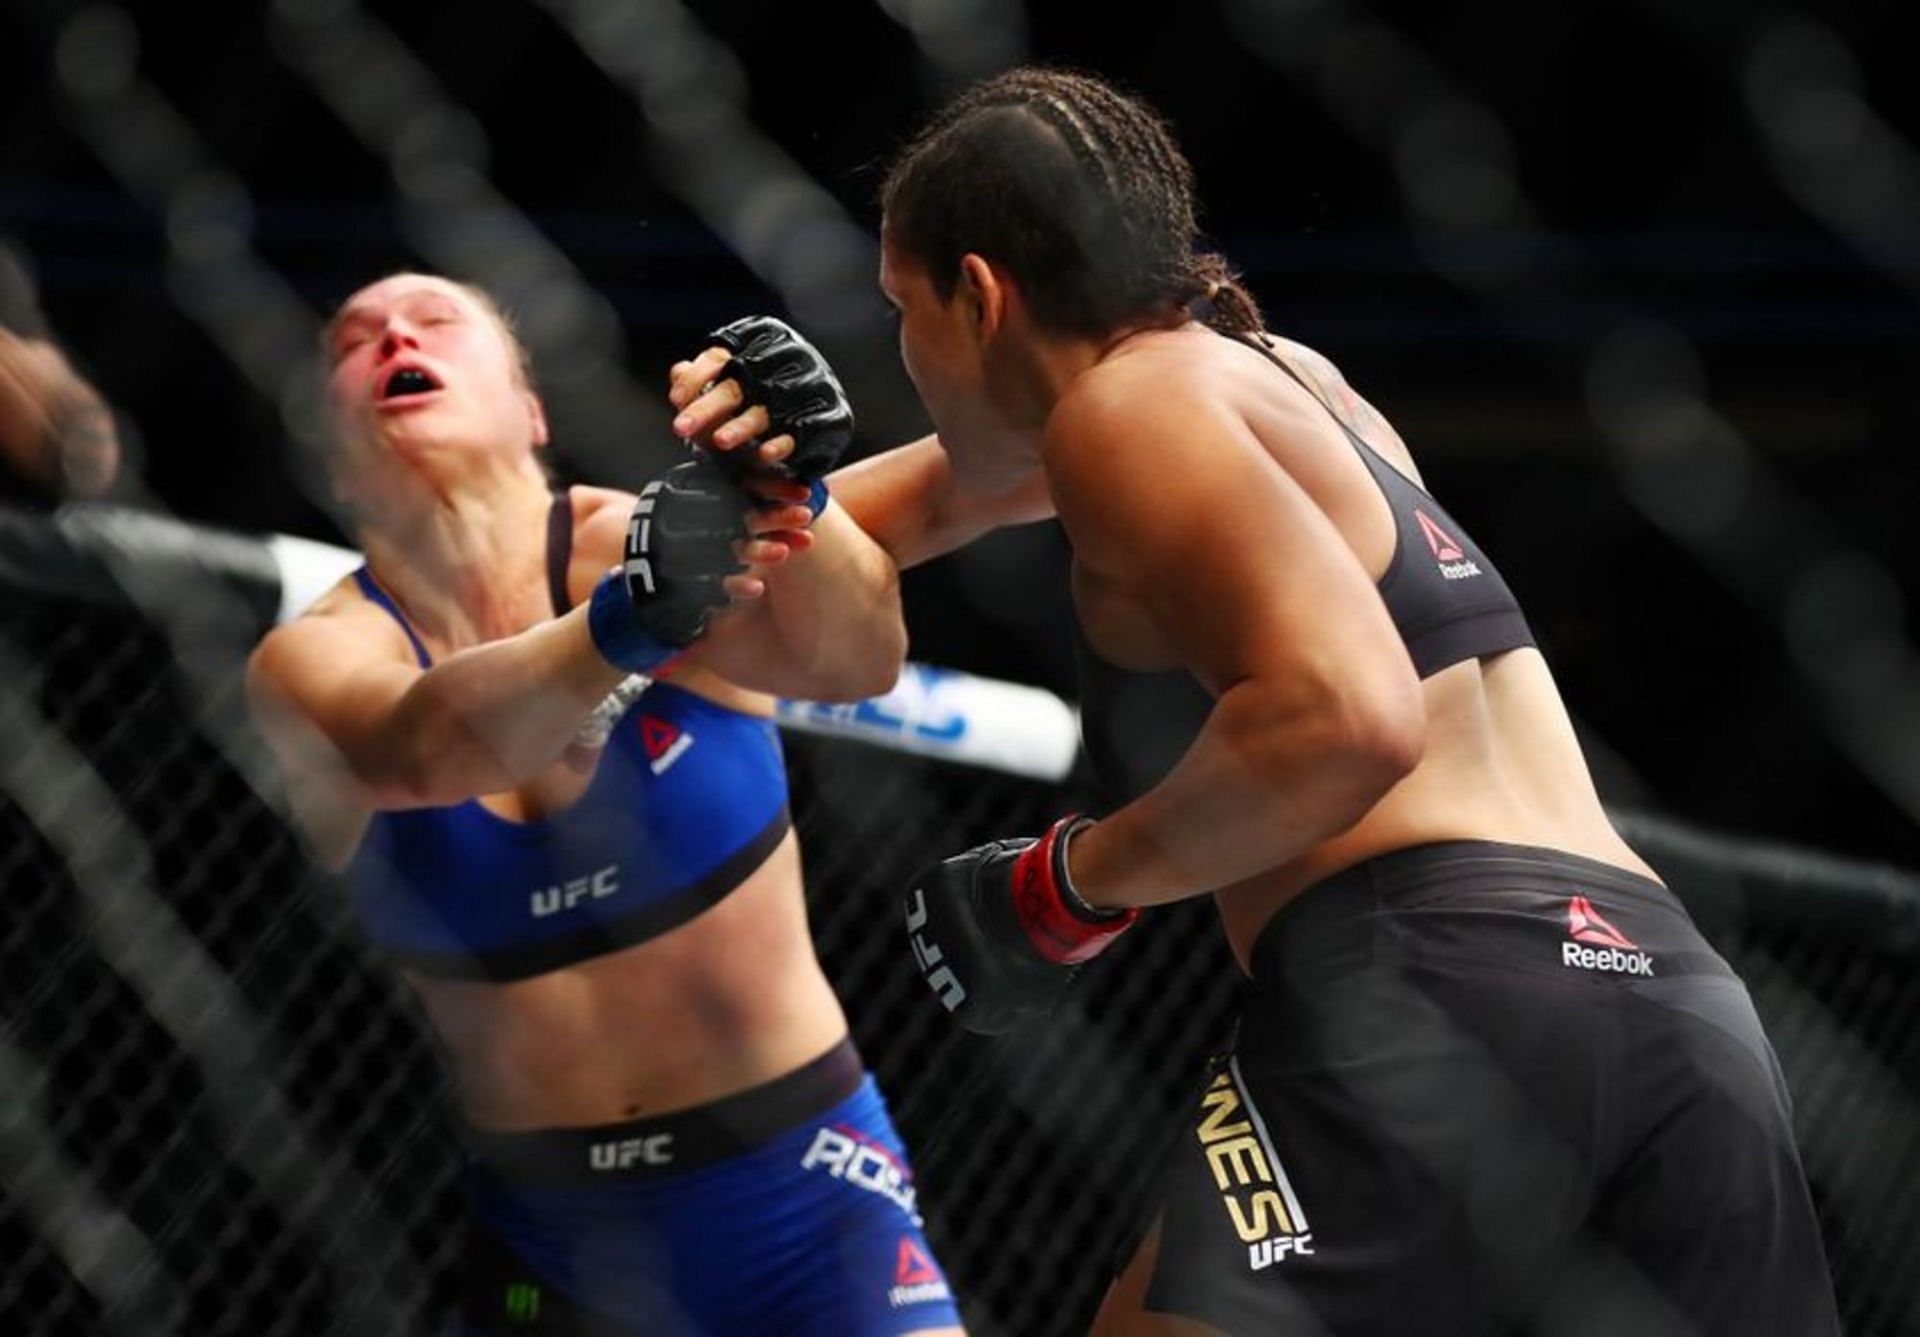 Amanda Nunes ended the Ronda Rousey era in brutal fashion at UFC 207